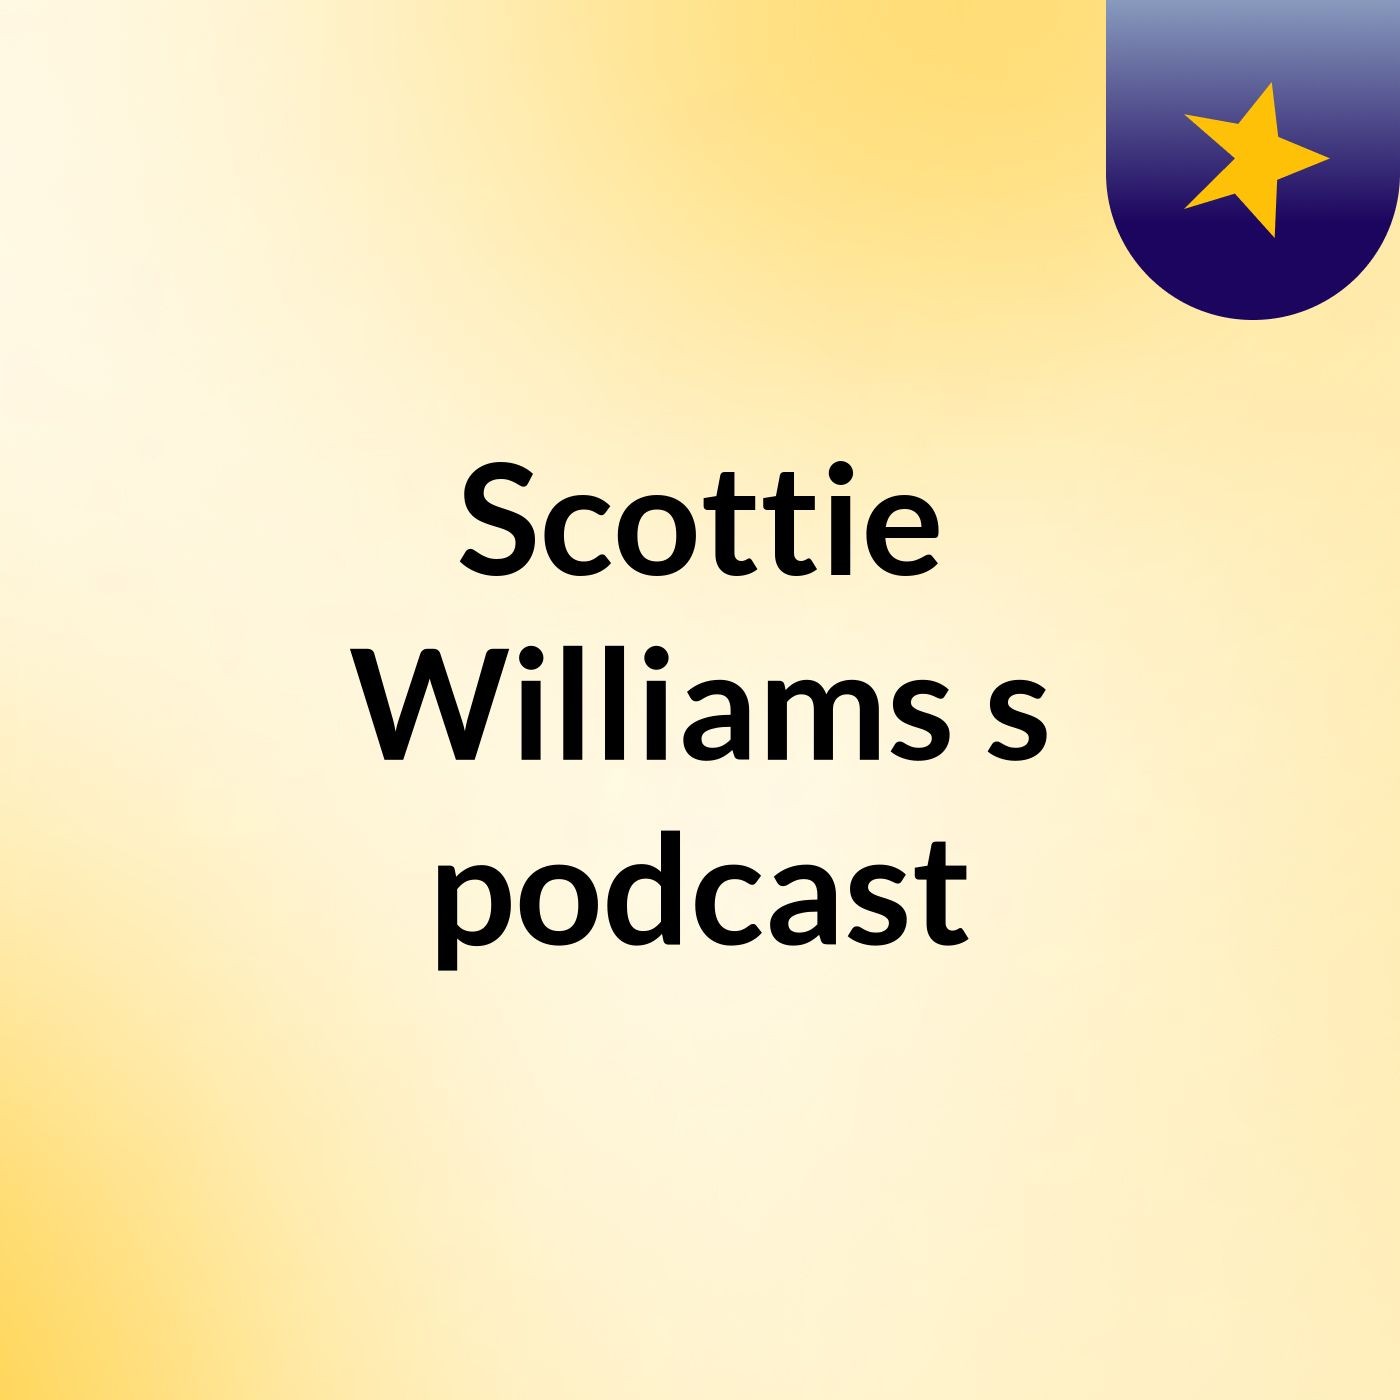 Scottie Williams's podcast